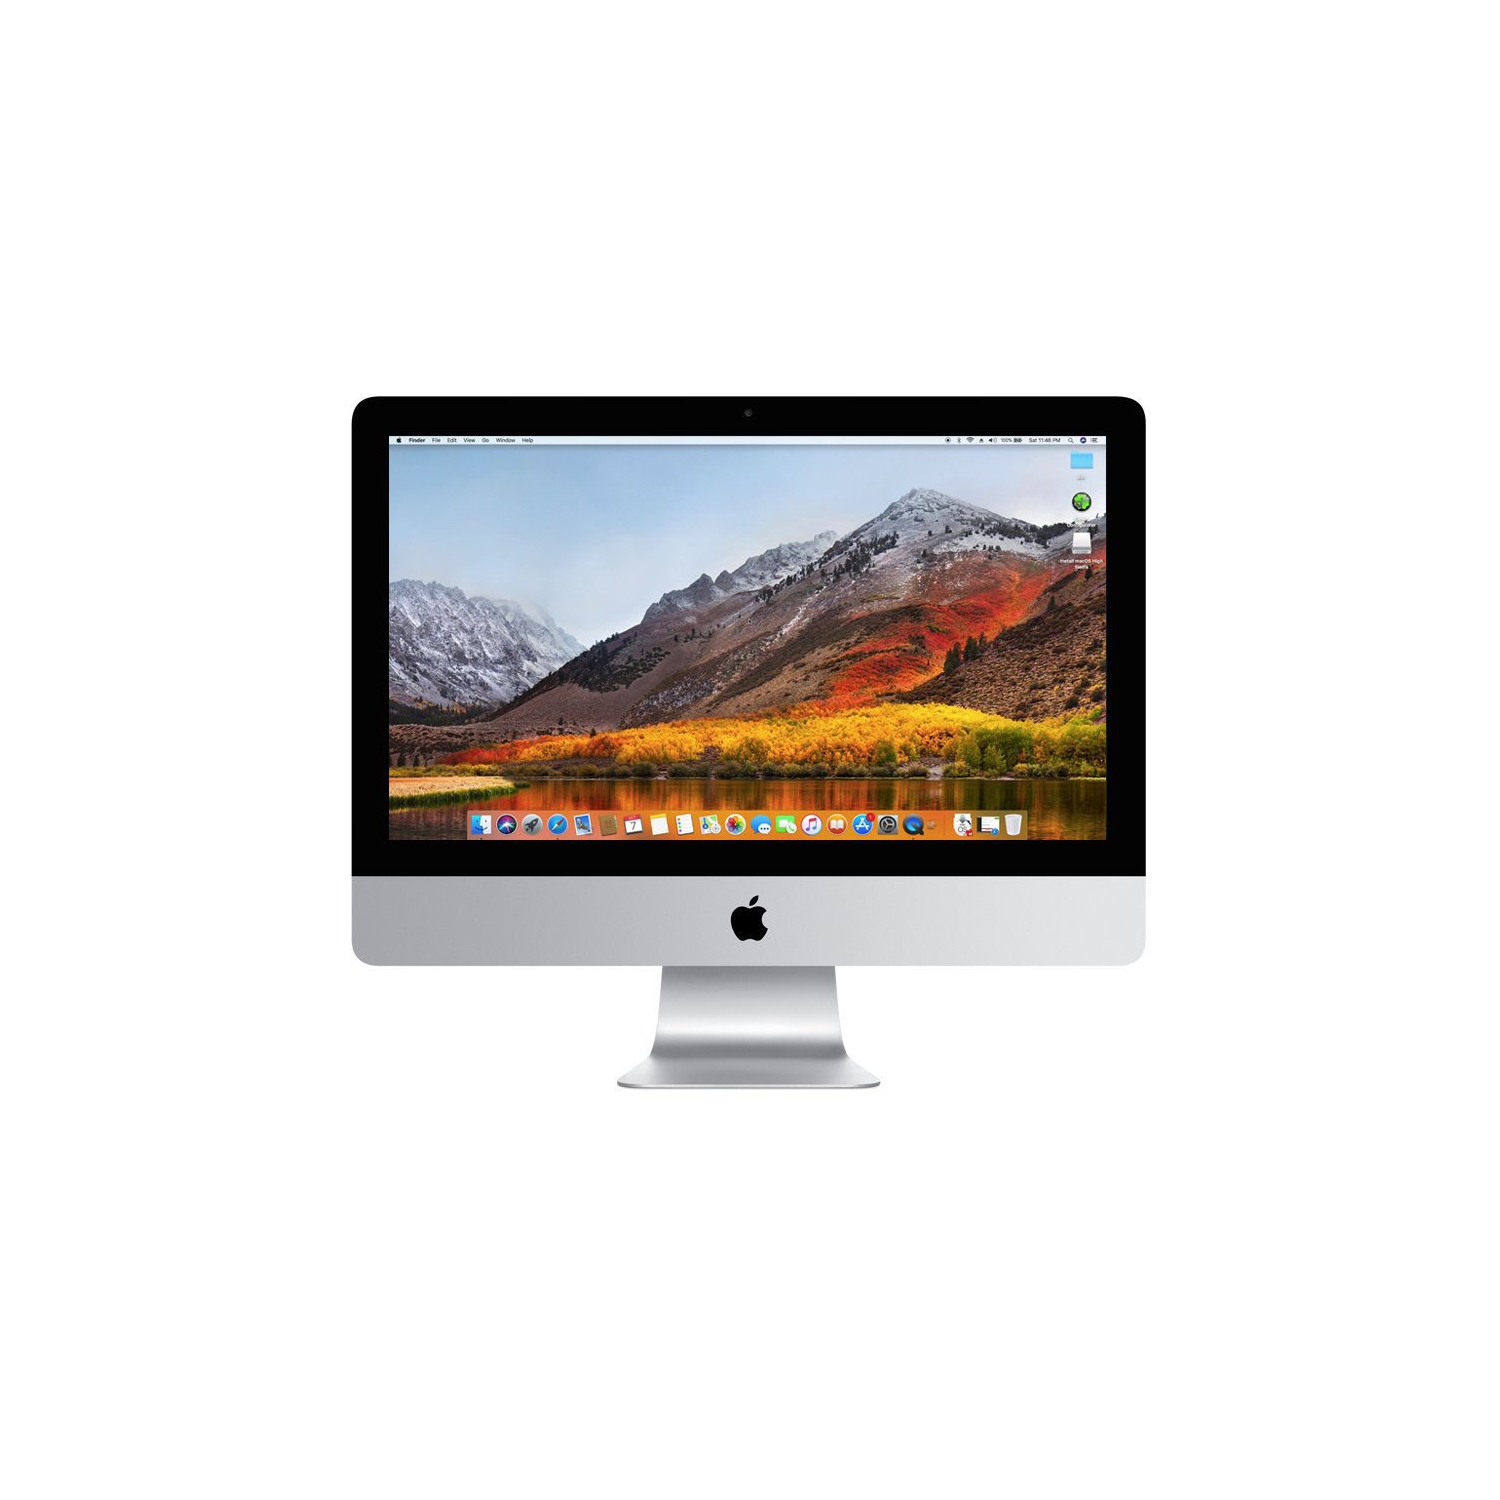 Apple iMac A1311-2308, 21.5" All-in-One, Intel Core 2 Duo, 4GB RAM, 500GB HDD, High Sierra OS. Refurbished